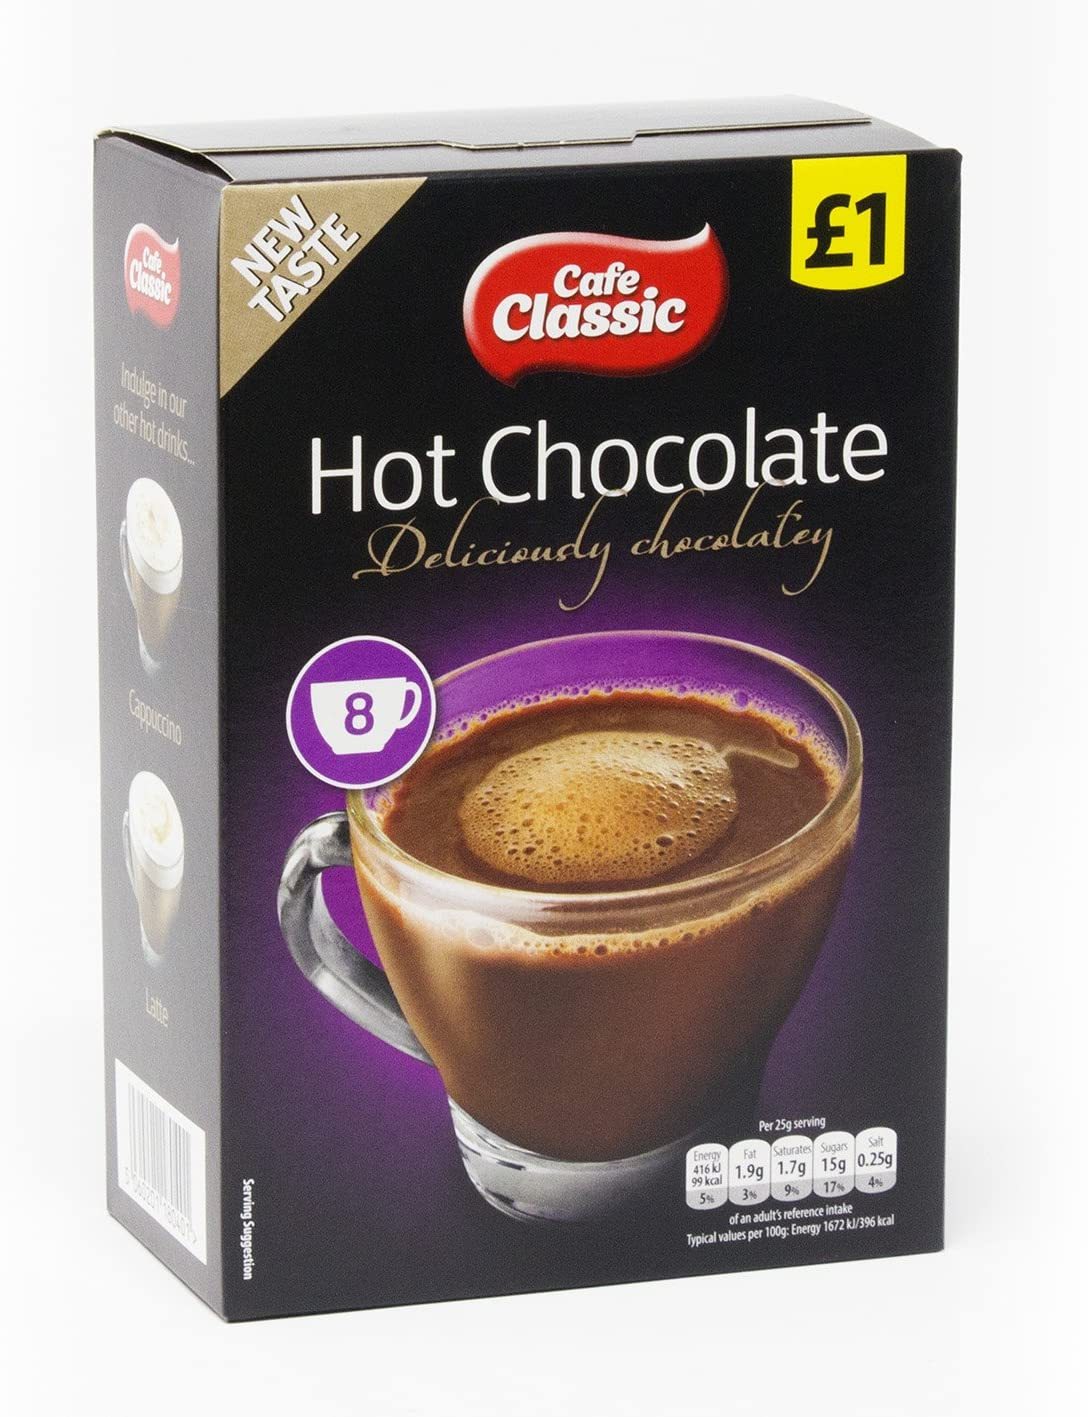 Cafe Classic Hot Chocolate @ SaveCo Online Ltd